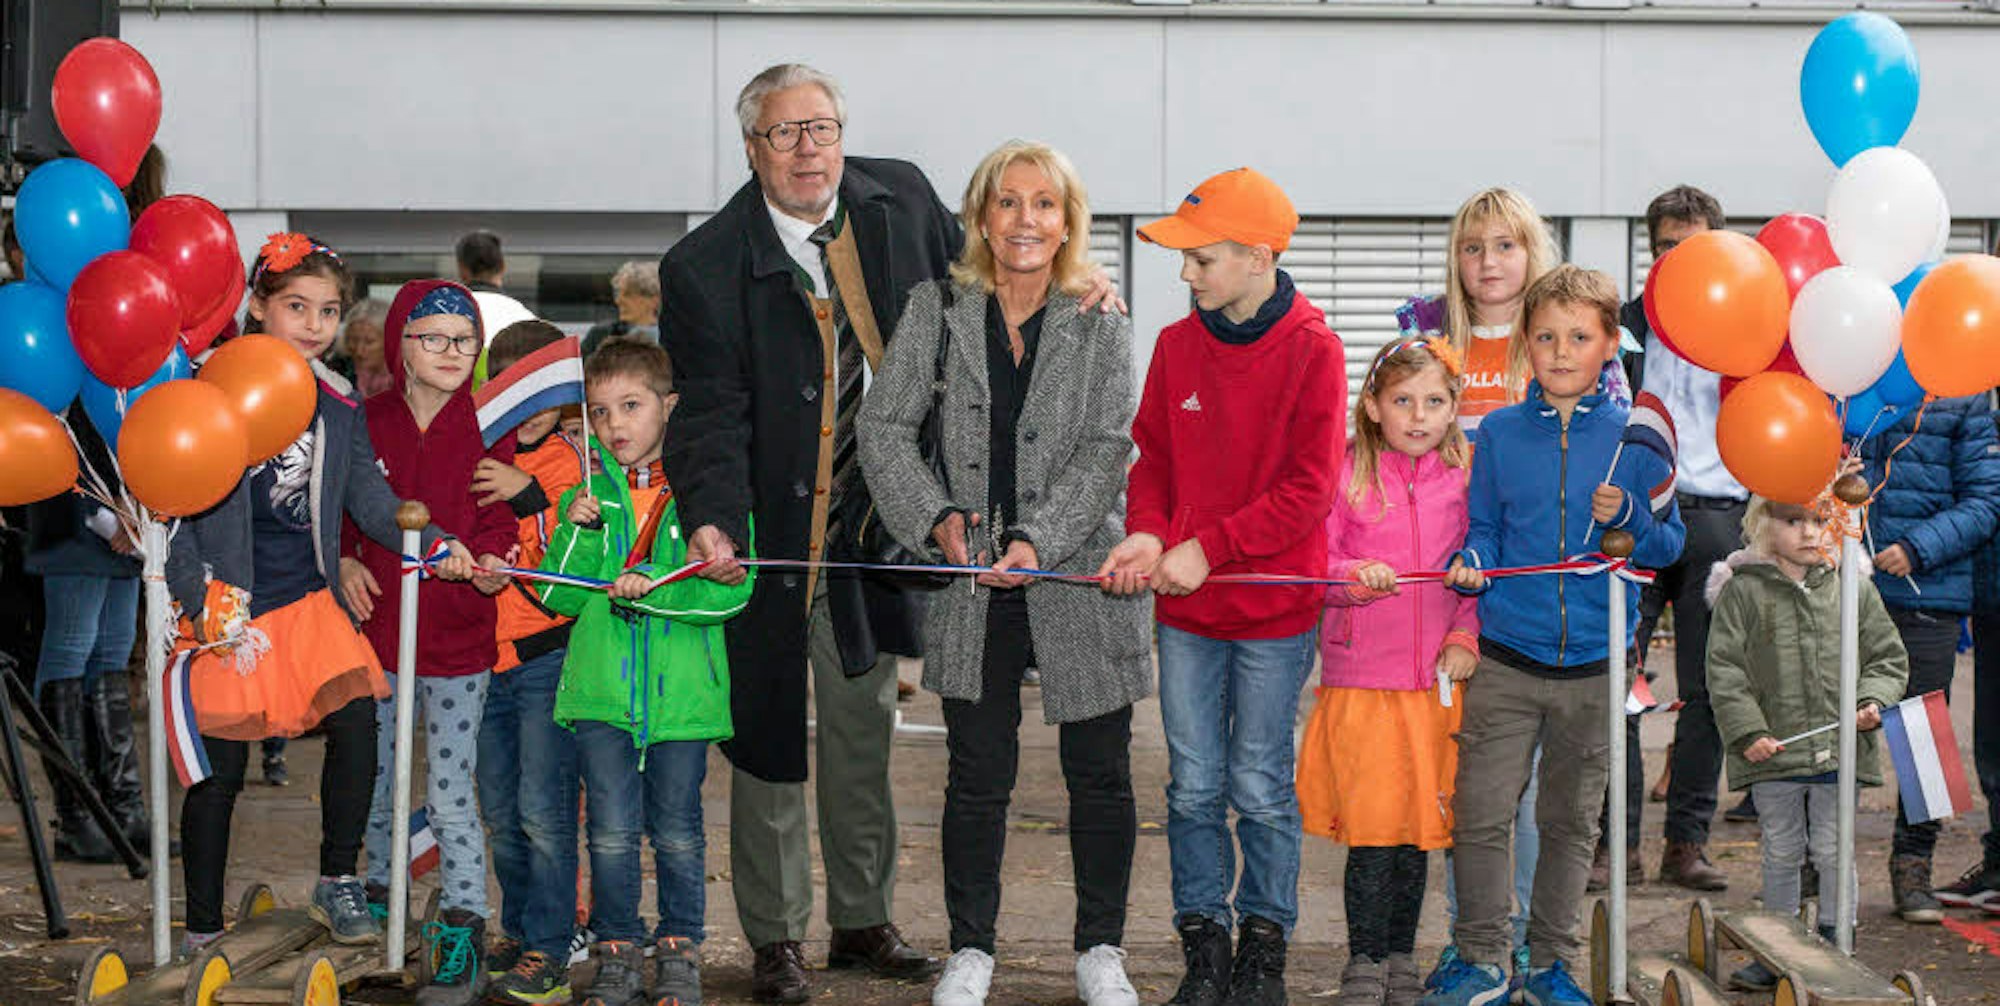 Orange geschmückt war am Mittwoch der Schulhof der Janusz-Korczak-Schule: Bezirksbürgermeister Henk van Benthem und Bezirksvertreterin Marlies Meurer (CDU) schnitten das symbolische Band durch.